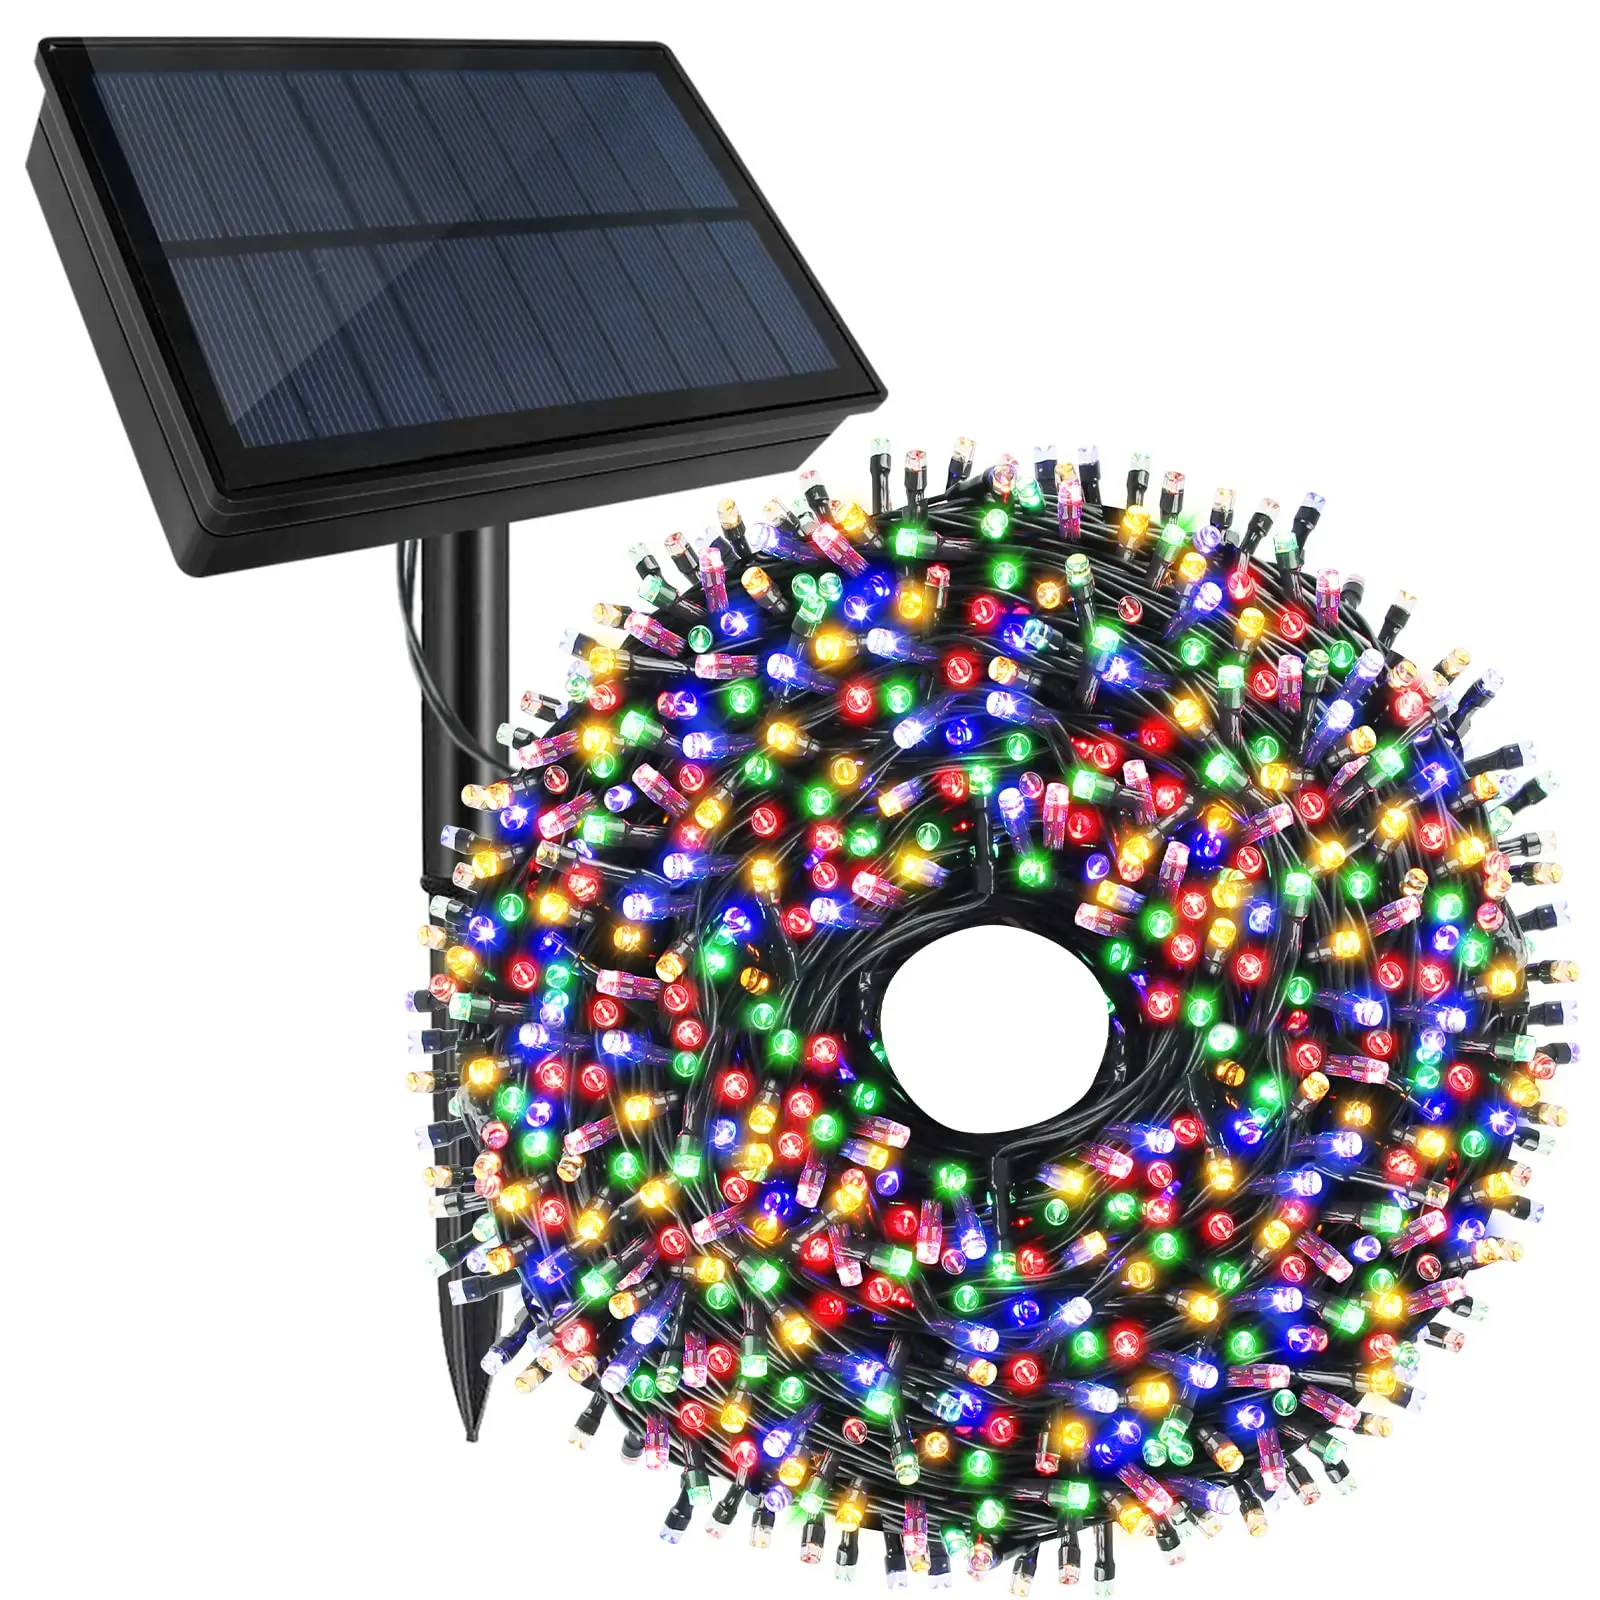 holiday solar panels - Do portable solar panels exist